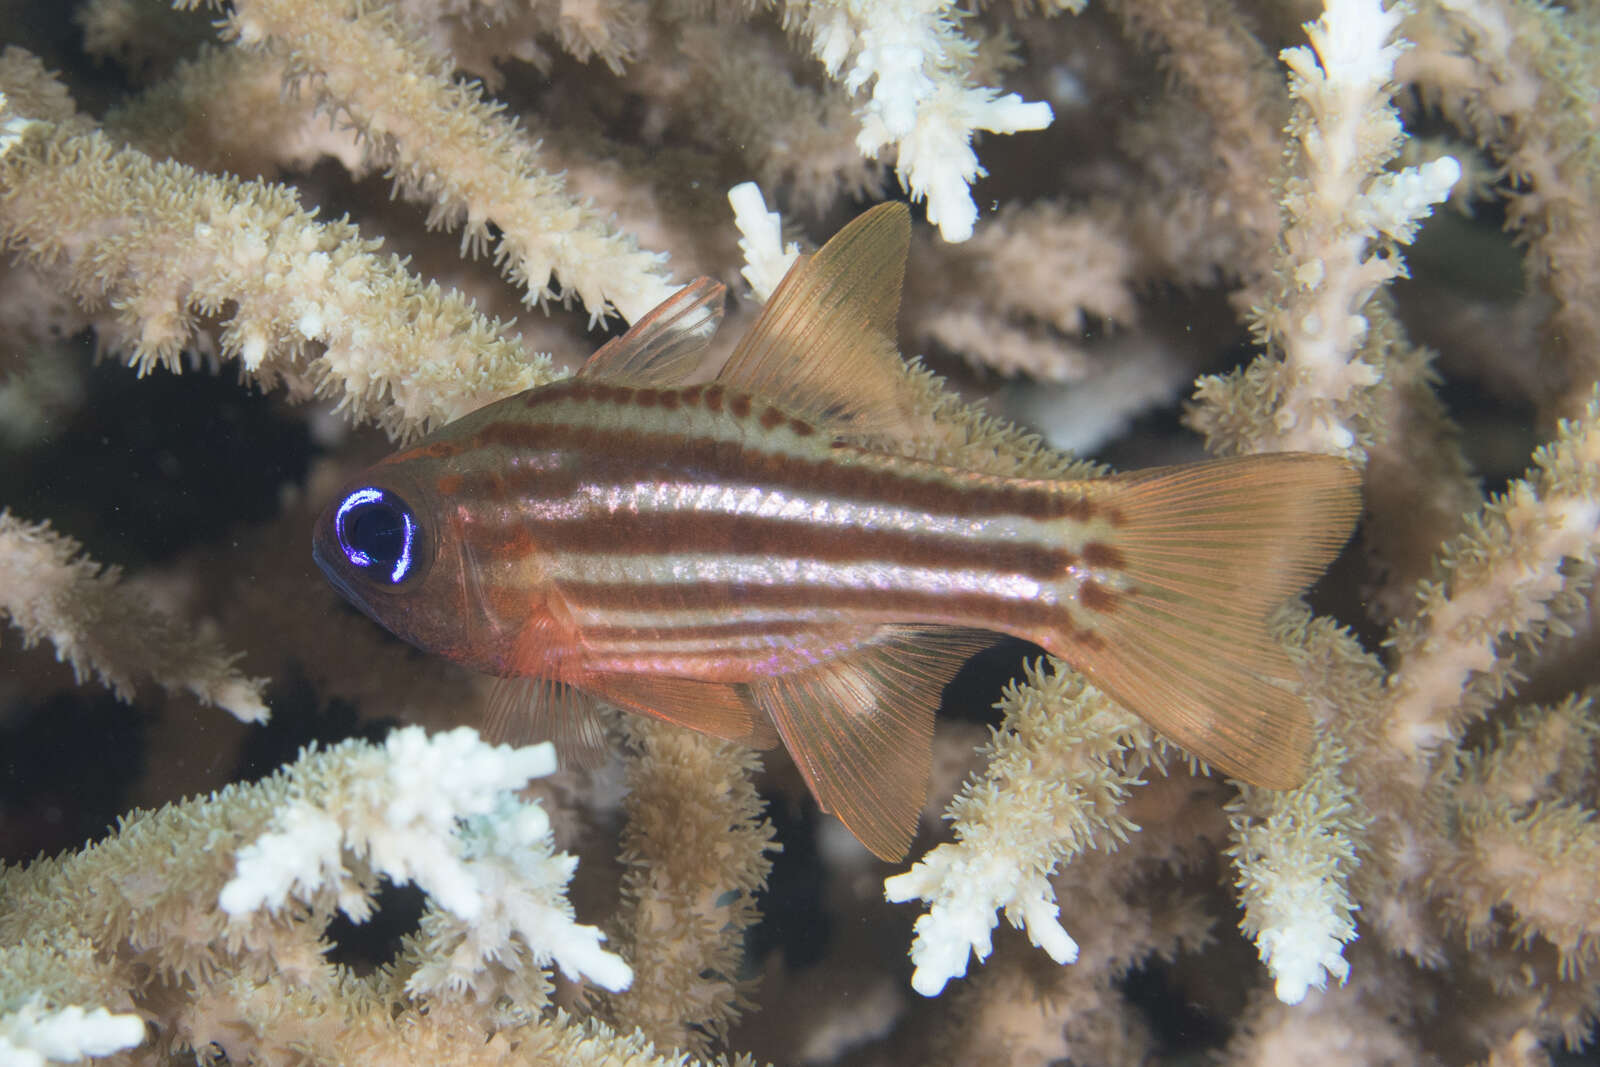 Image of Blue-eye cardinalfish